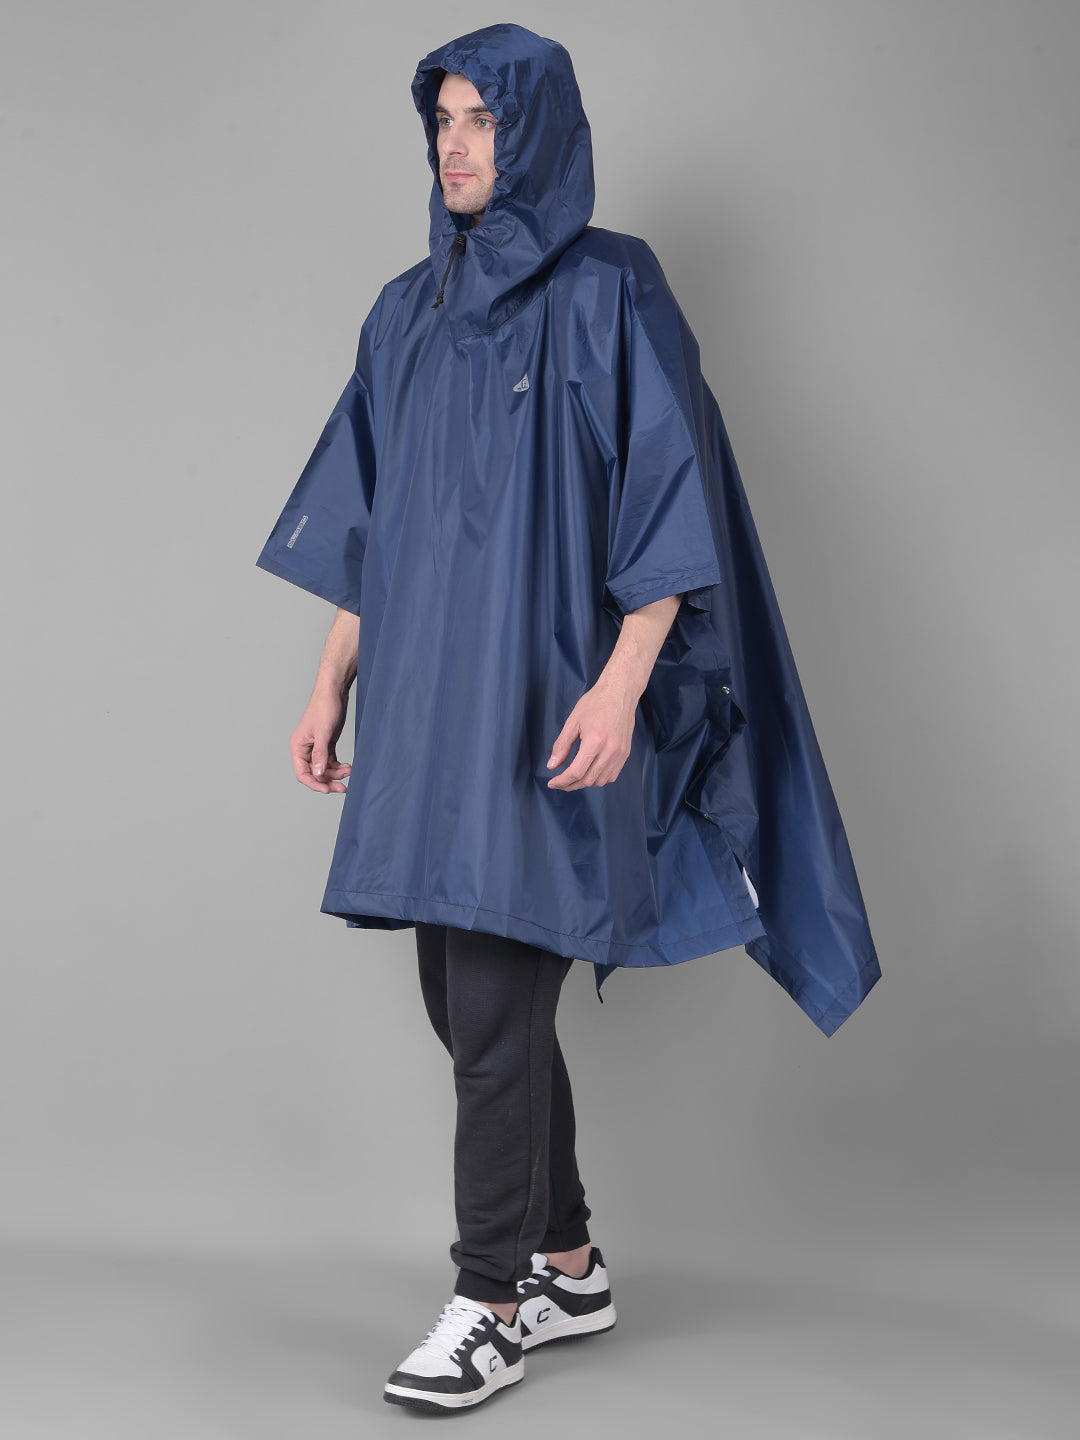 GLOBO Navy Unisex Outdoor Lightweight Rain Poncho for Fashionable Waterproof Weather Protection - Navy, Medium